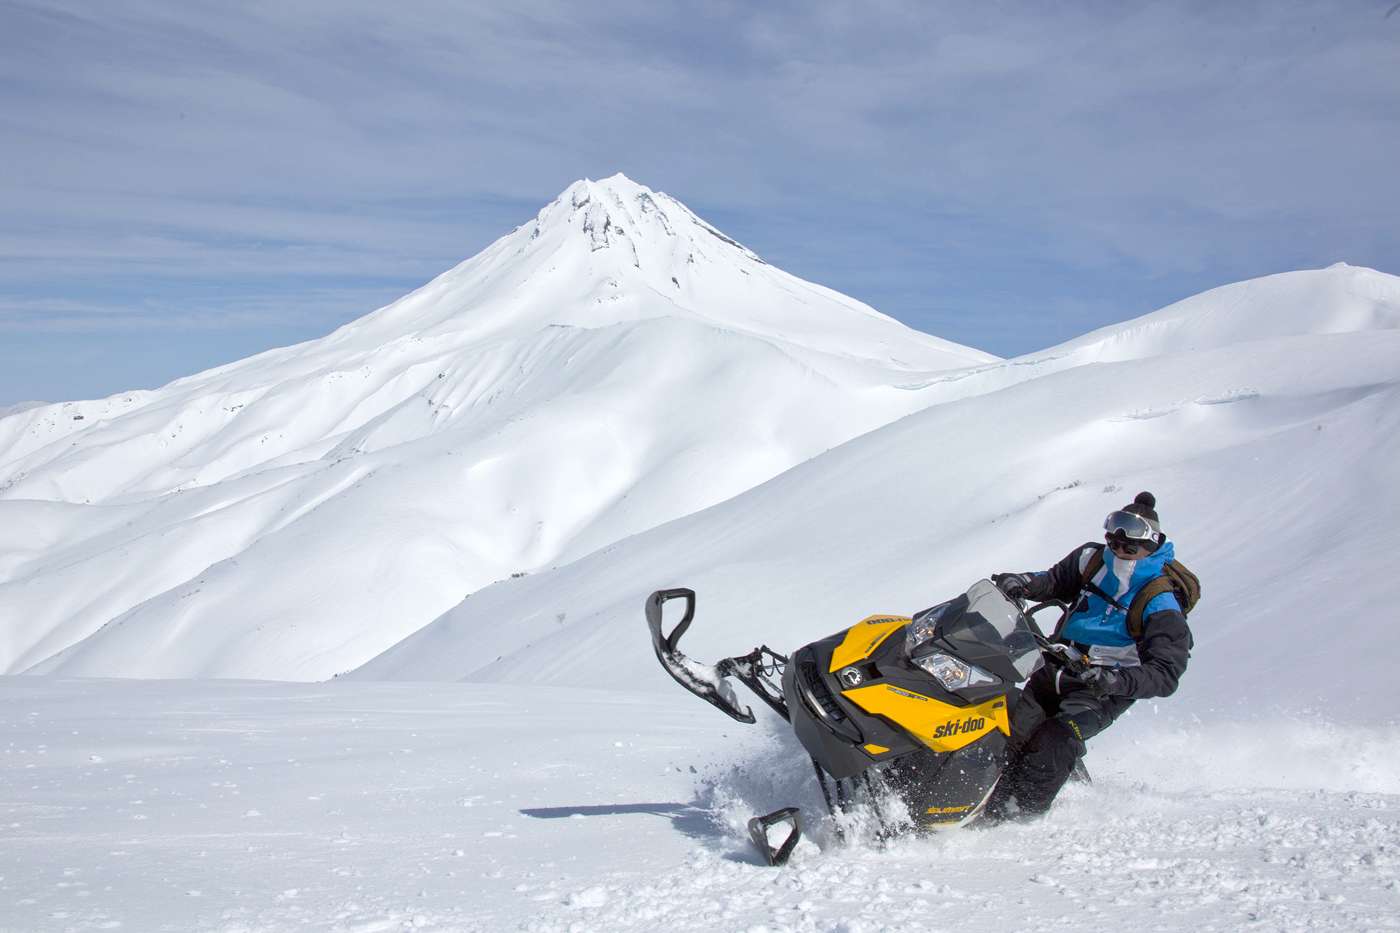 Туры на снегоходах на Камчатке